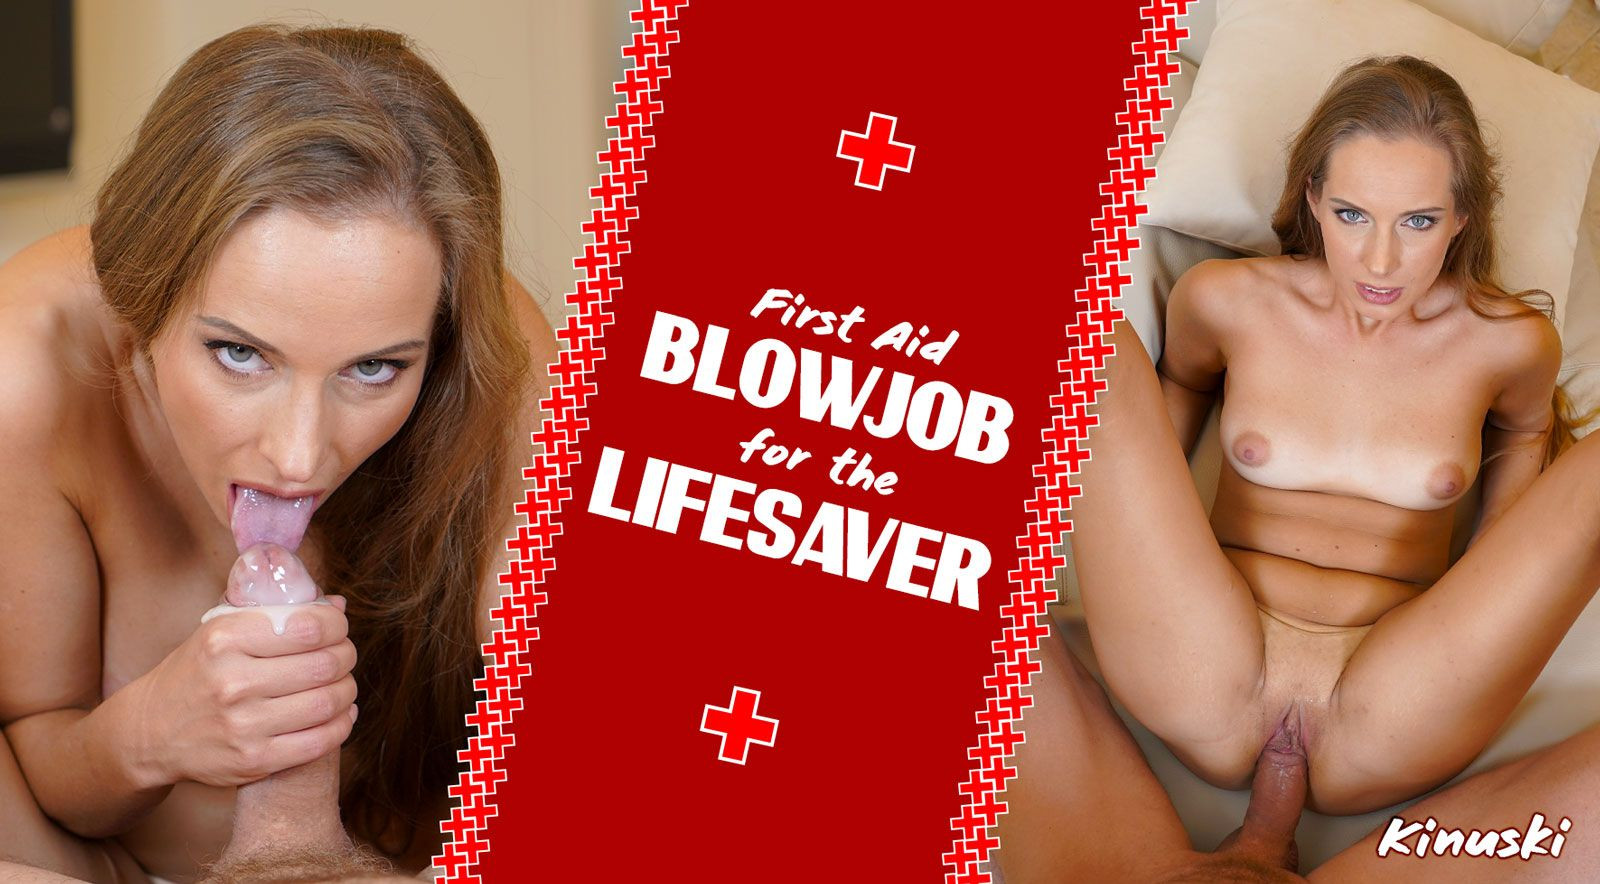 First Aid Blowjob for The Lifesaver: Kinuski Slideshow